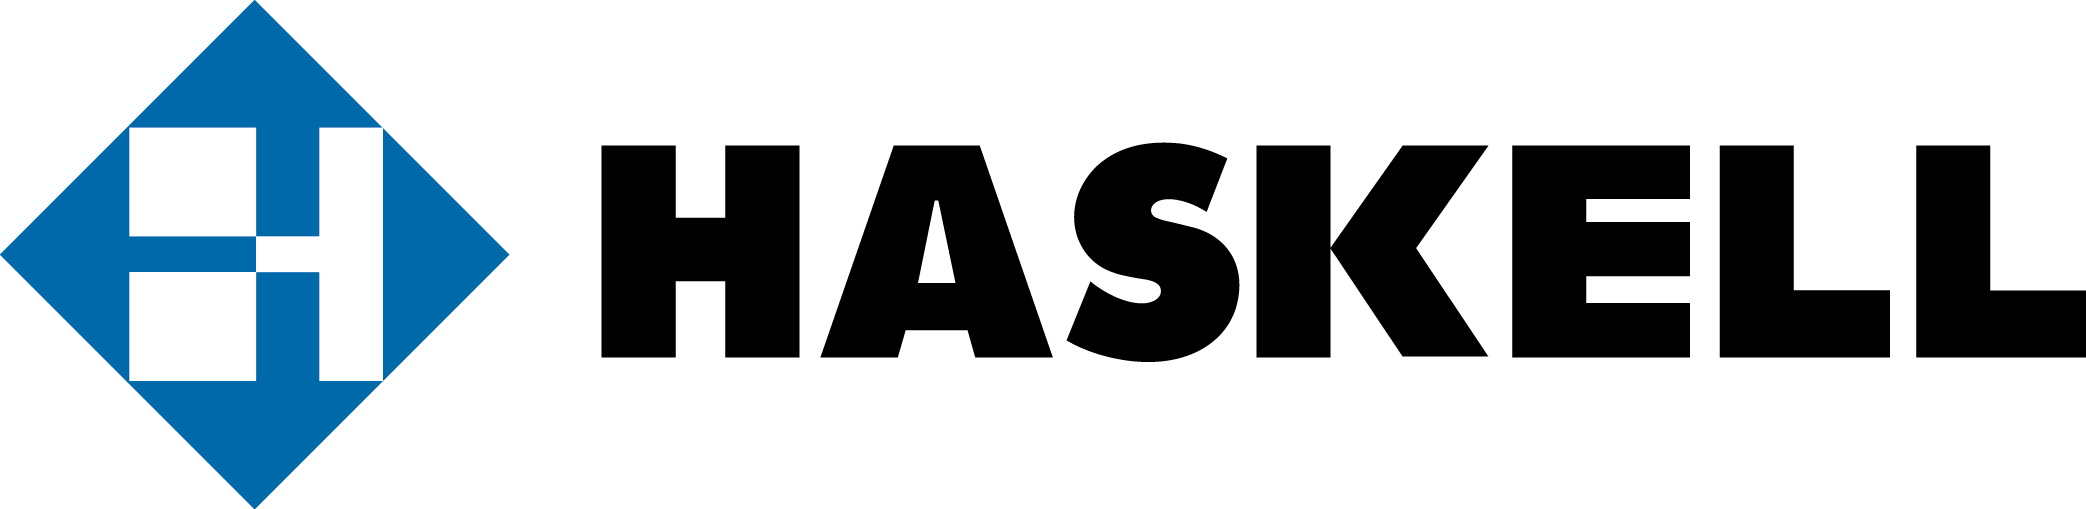 Haskell-logo